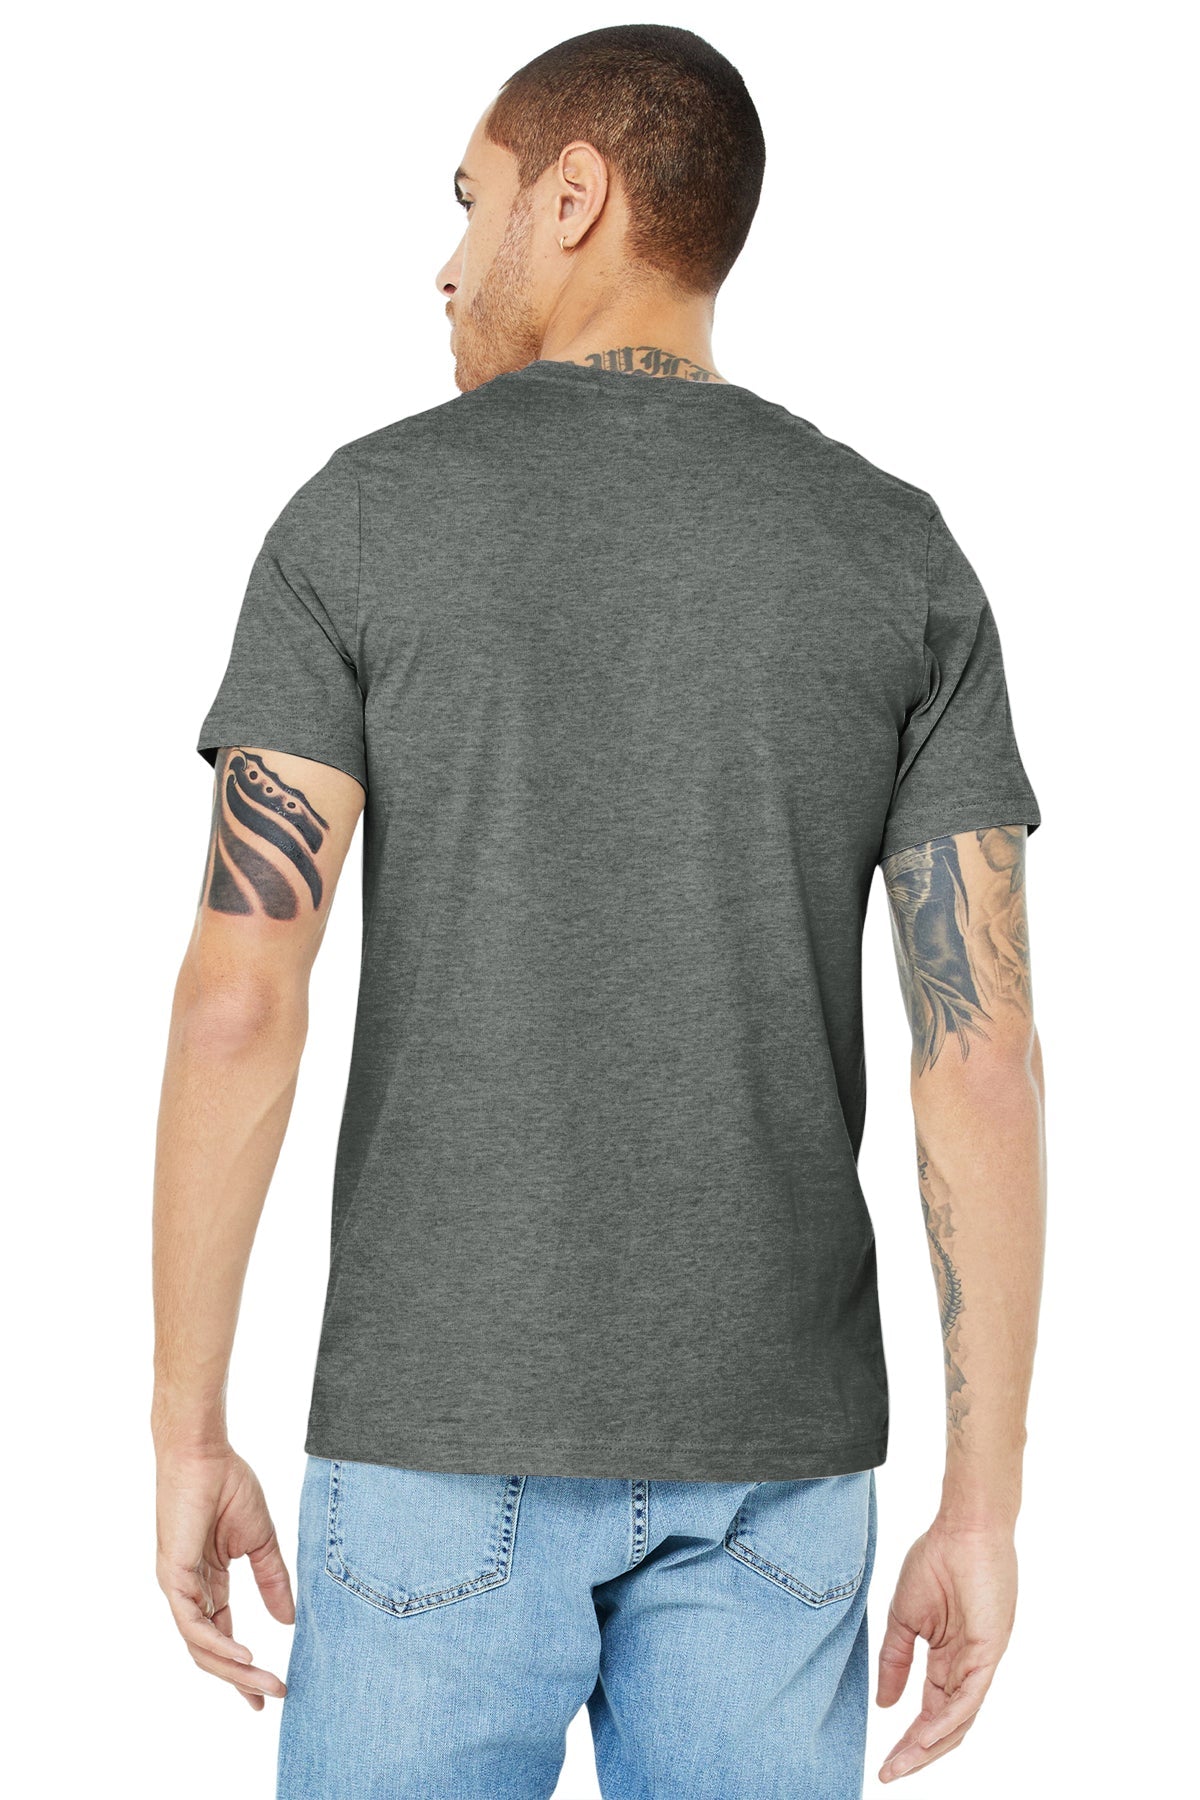 bella + canvas unisex jersey short sleeve t-shirt 3001c deep heather